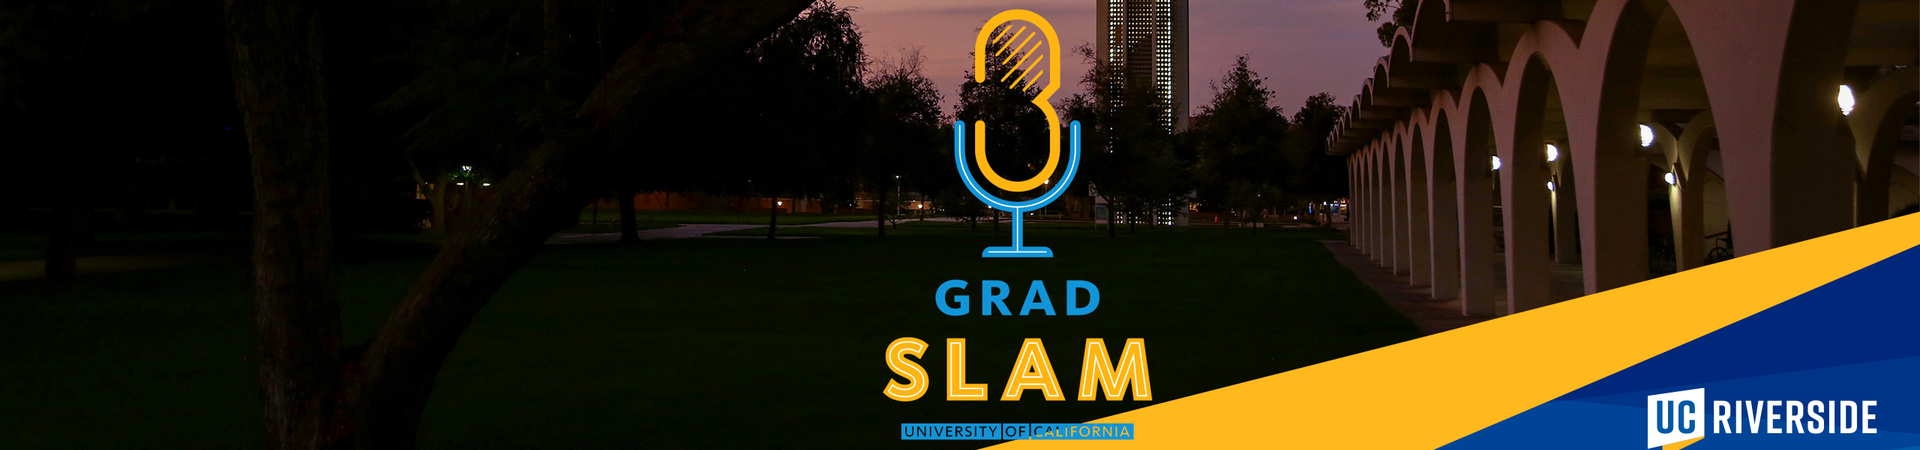 Grad Slam thin banner 2